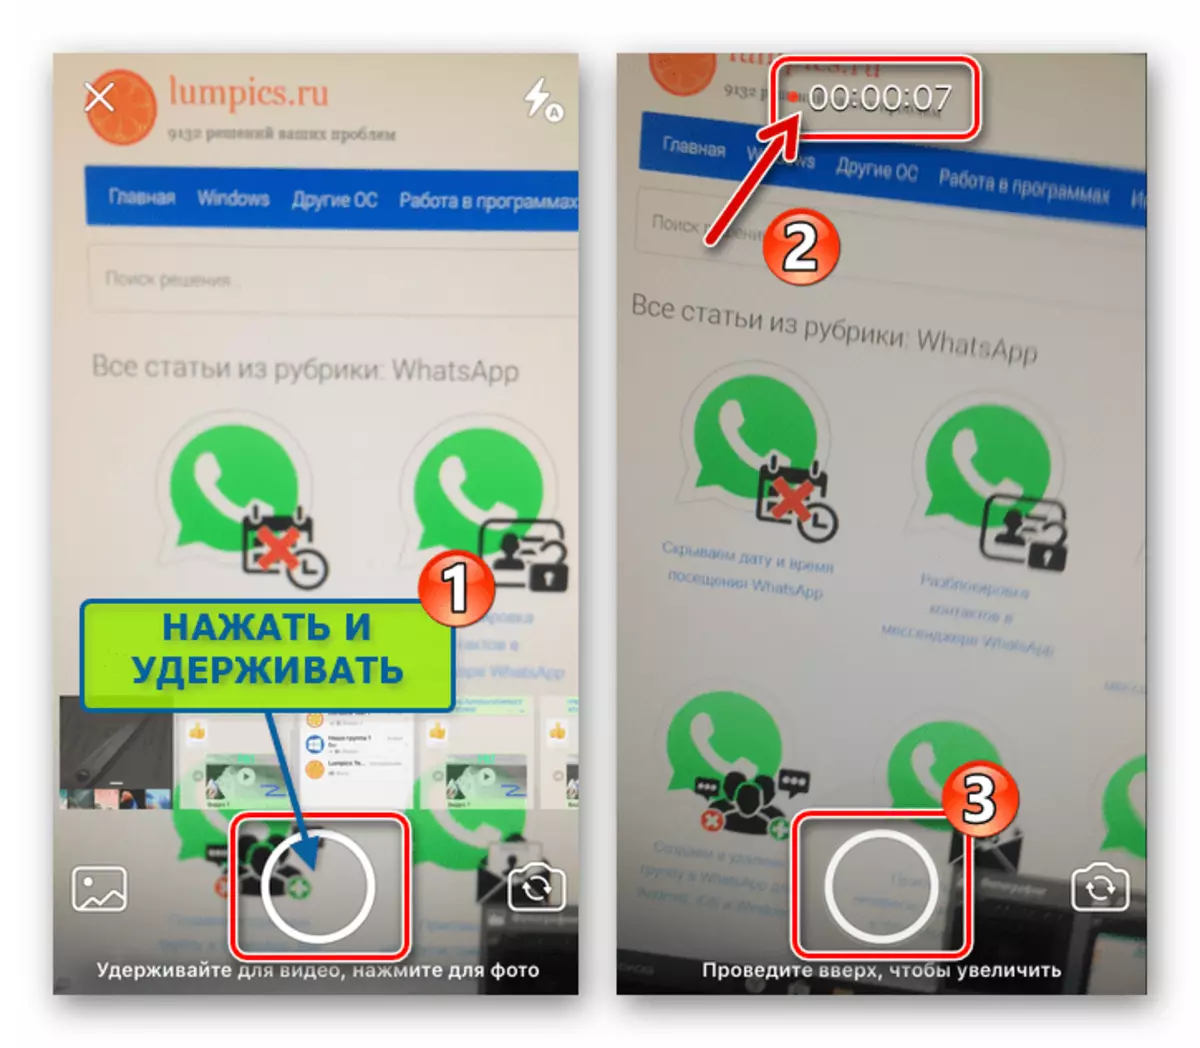 Whatsapp untuk proses perekaman video iPhone untuk mengirim melalui Messenger